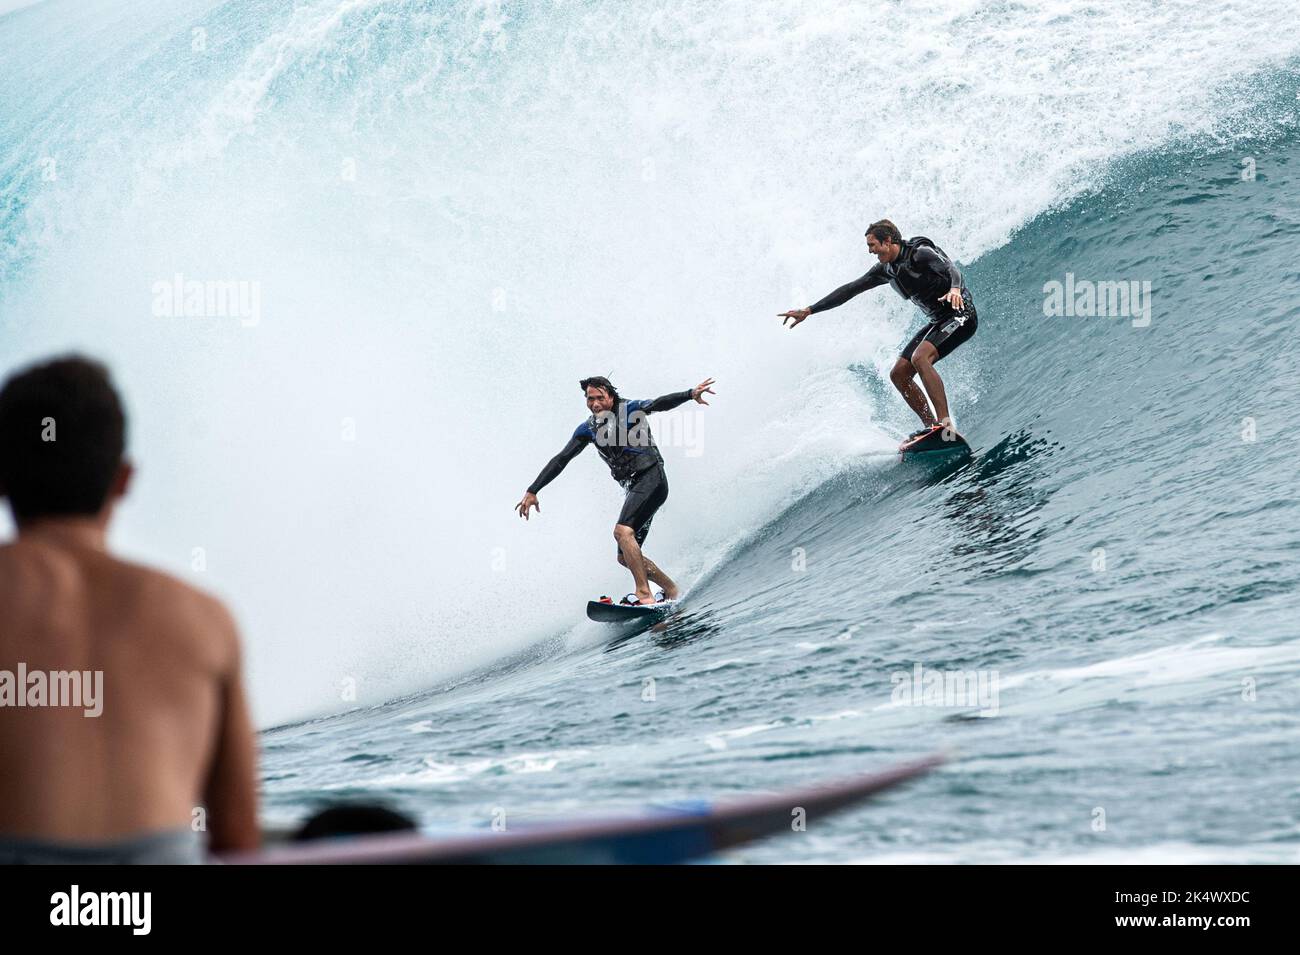 SURF i surfisti tahitiani Tikanui Smith e Tuhiti Haumani stanno facendo la stessa ondata di surf tow-in a Teahupoo durante un enorme swell il 12 settembre 2014 a Teahupoo a Tahiti, Polinesia francese - Foto: Julien Girardot/DPPI/LiveMedia Foto Stock